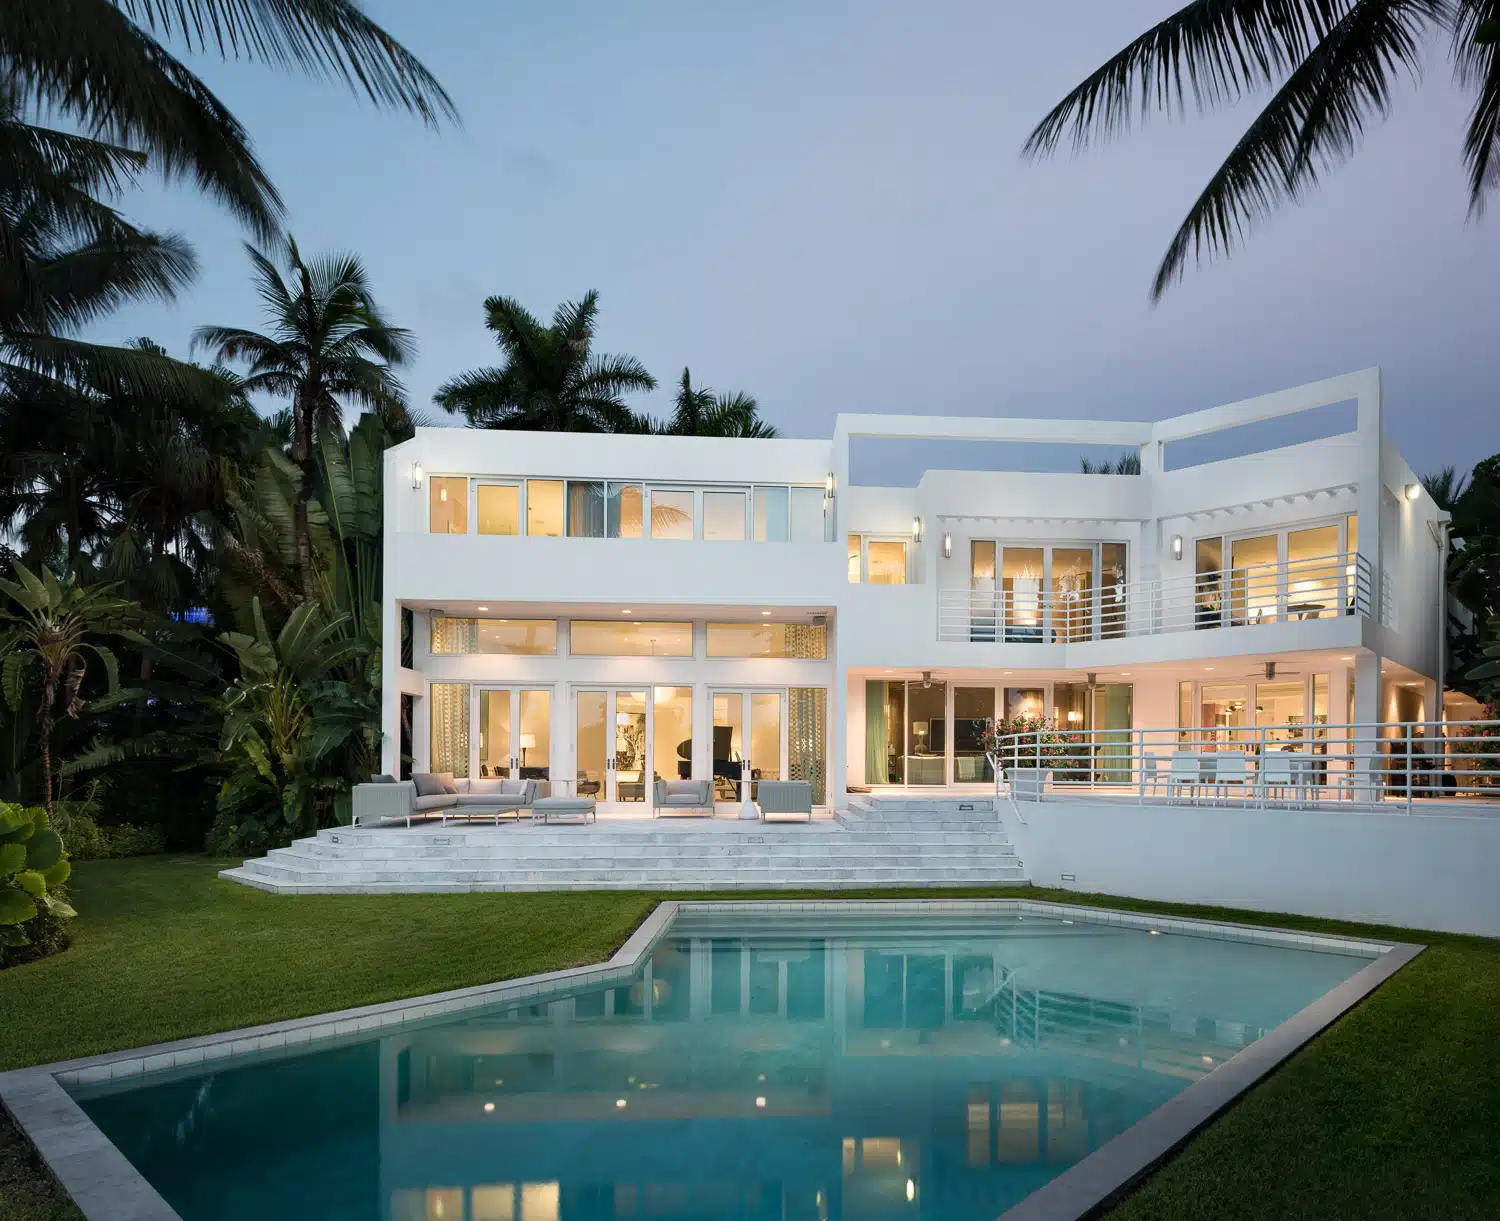 The Miami Vice House